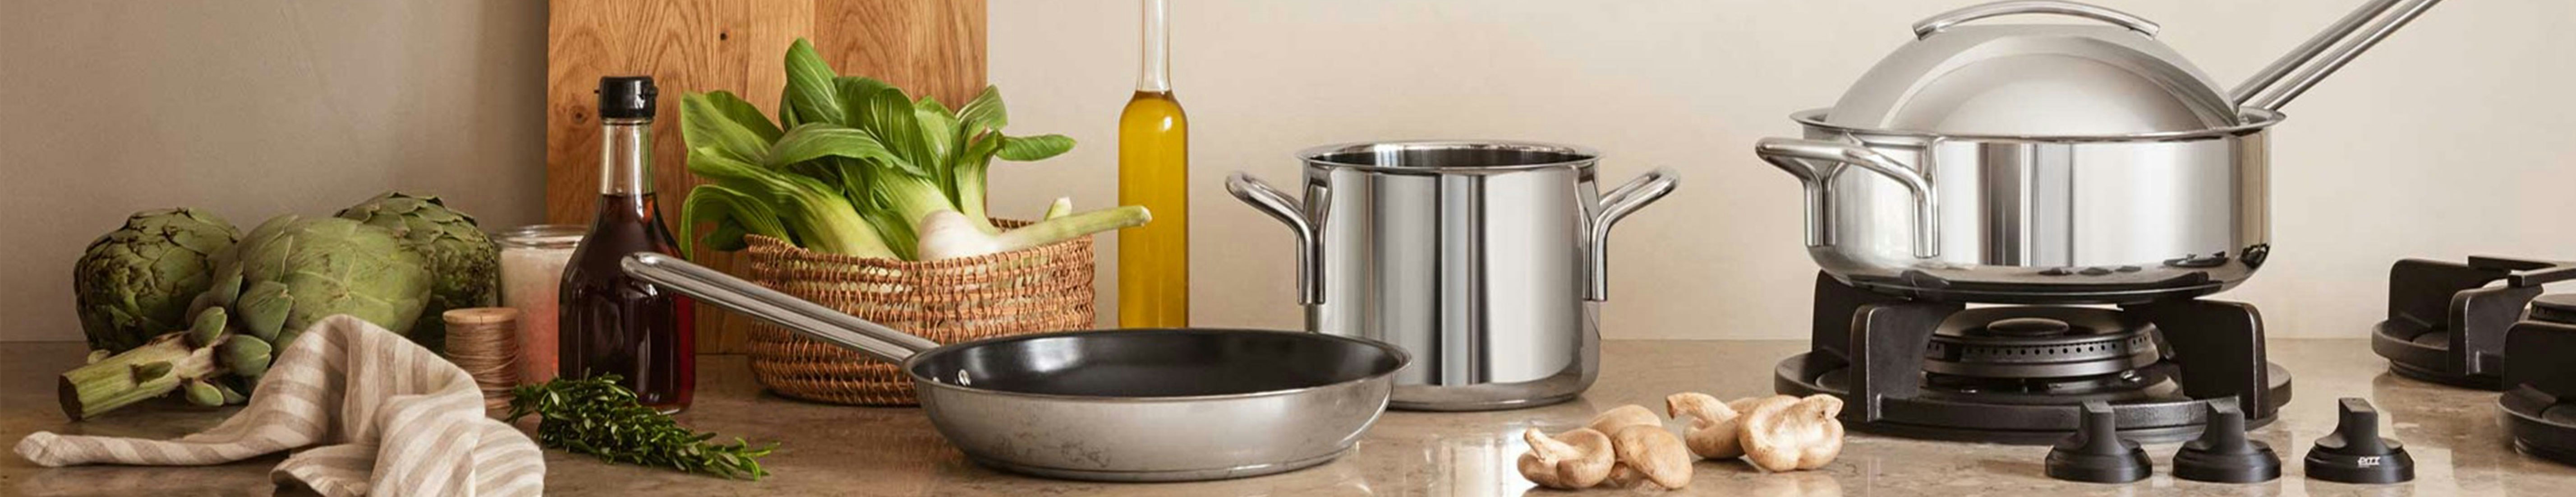 Everything for the kitchen - Kitchen equipment u0026 kitchen products online |  RoyalDesign.com